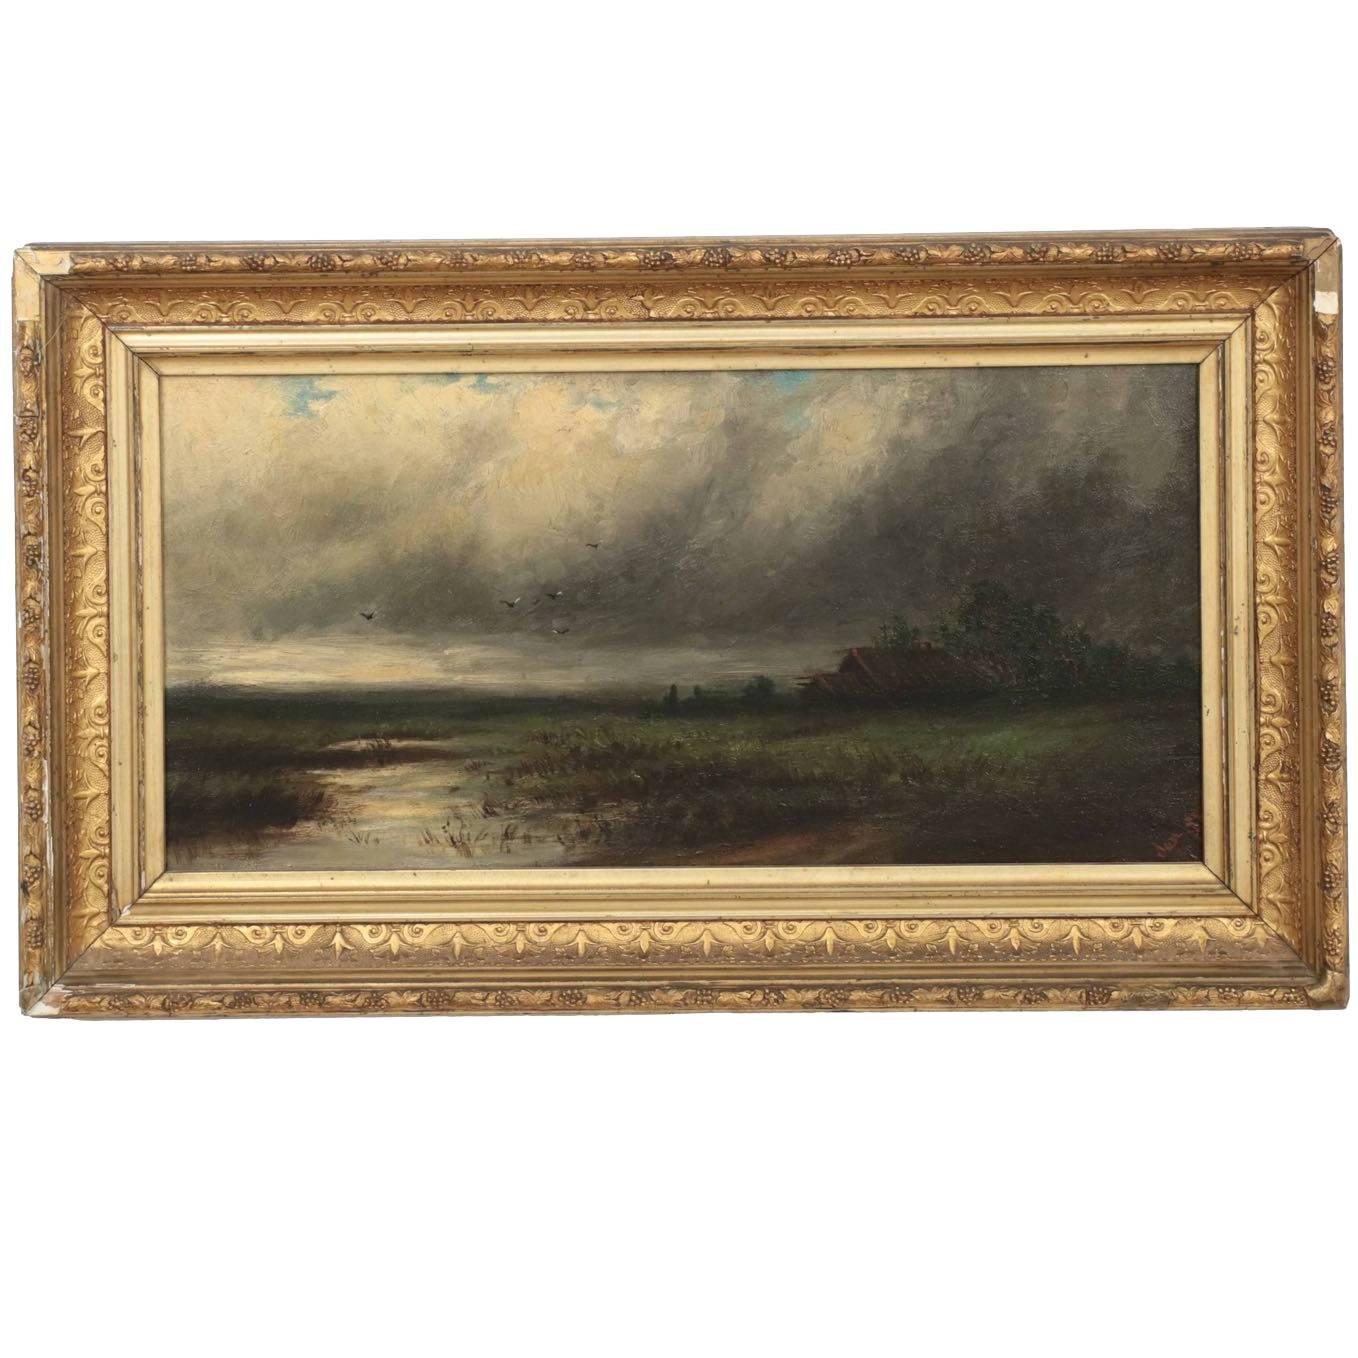 19th Century Barbizon School Landscape Oil Painting of Storm over Marsh